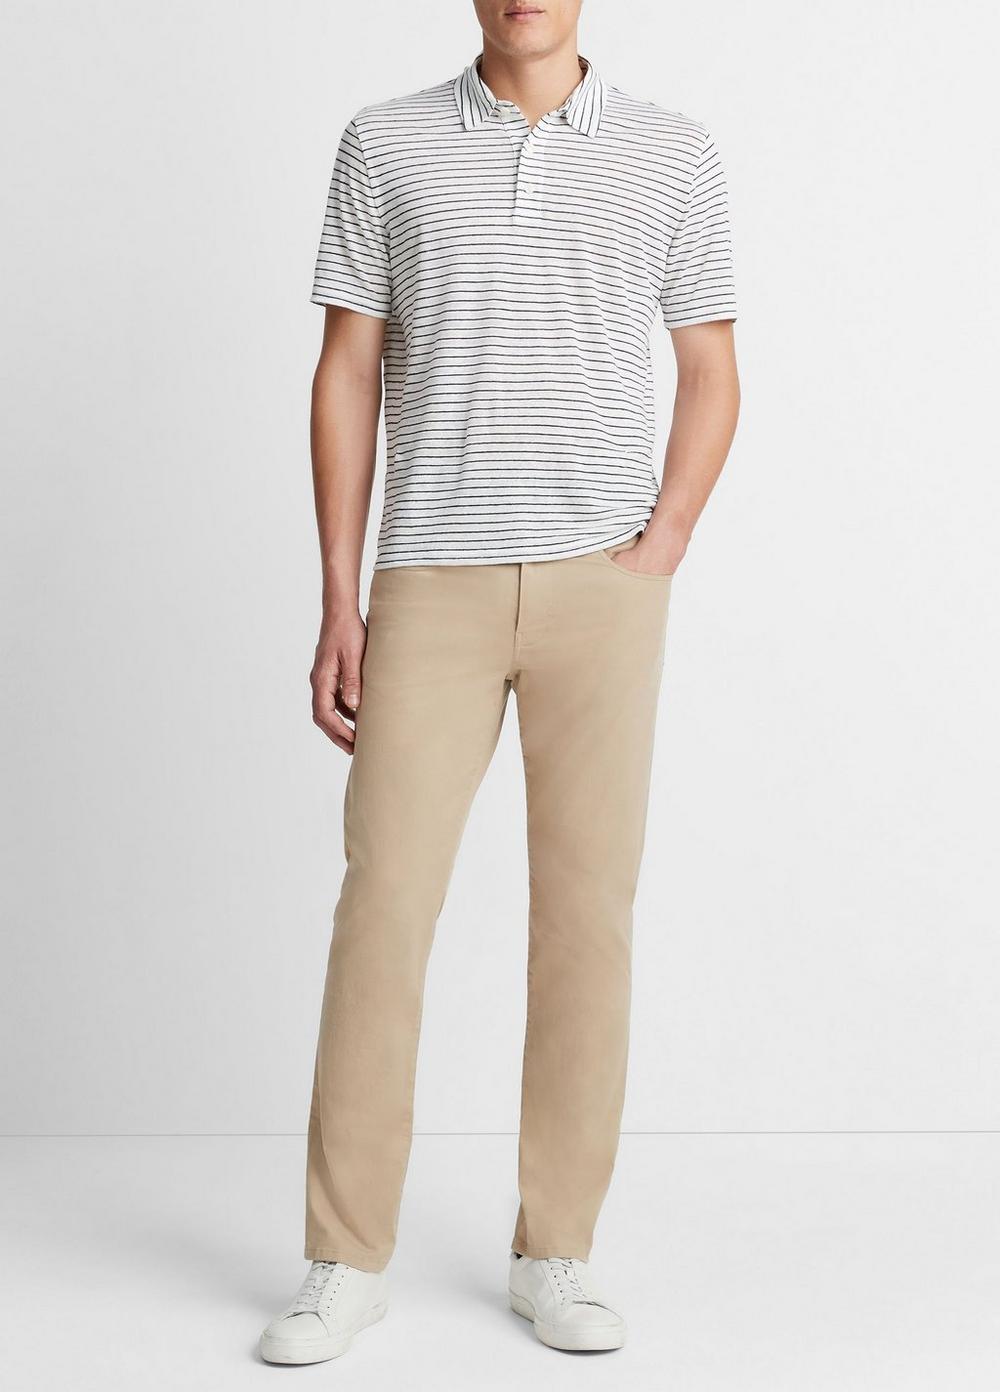 Striped Linen Short-Sleeve Polo Shirt, Optic White/coastal Blue, Size M Vince